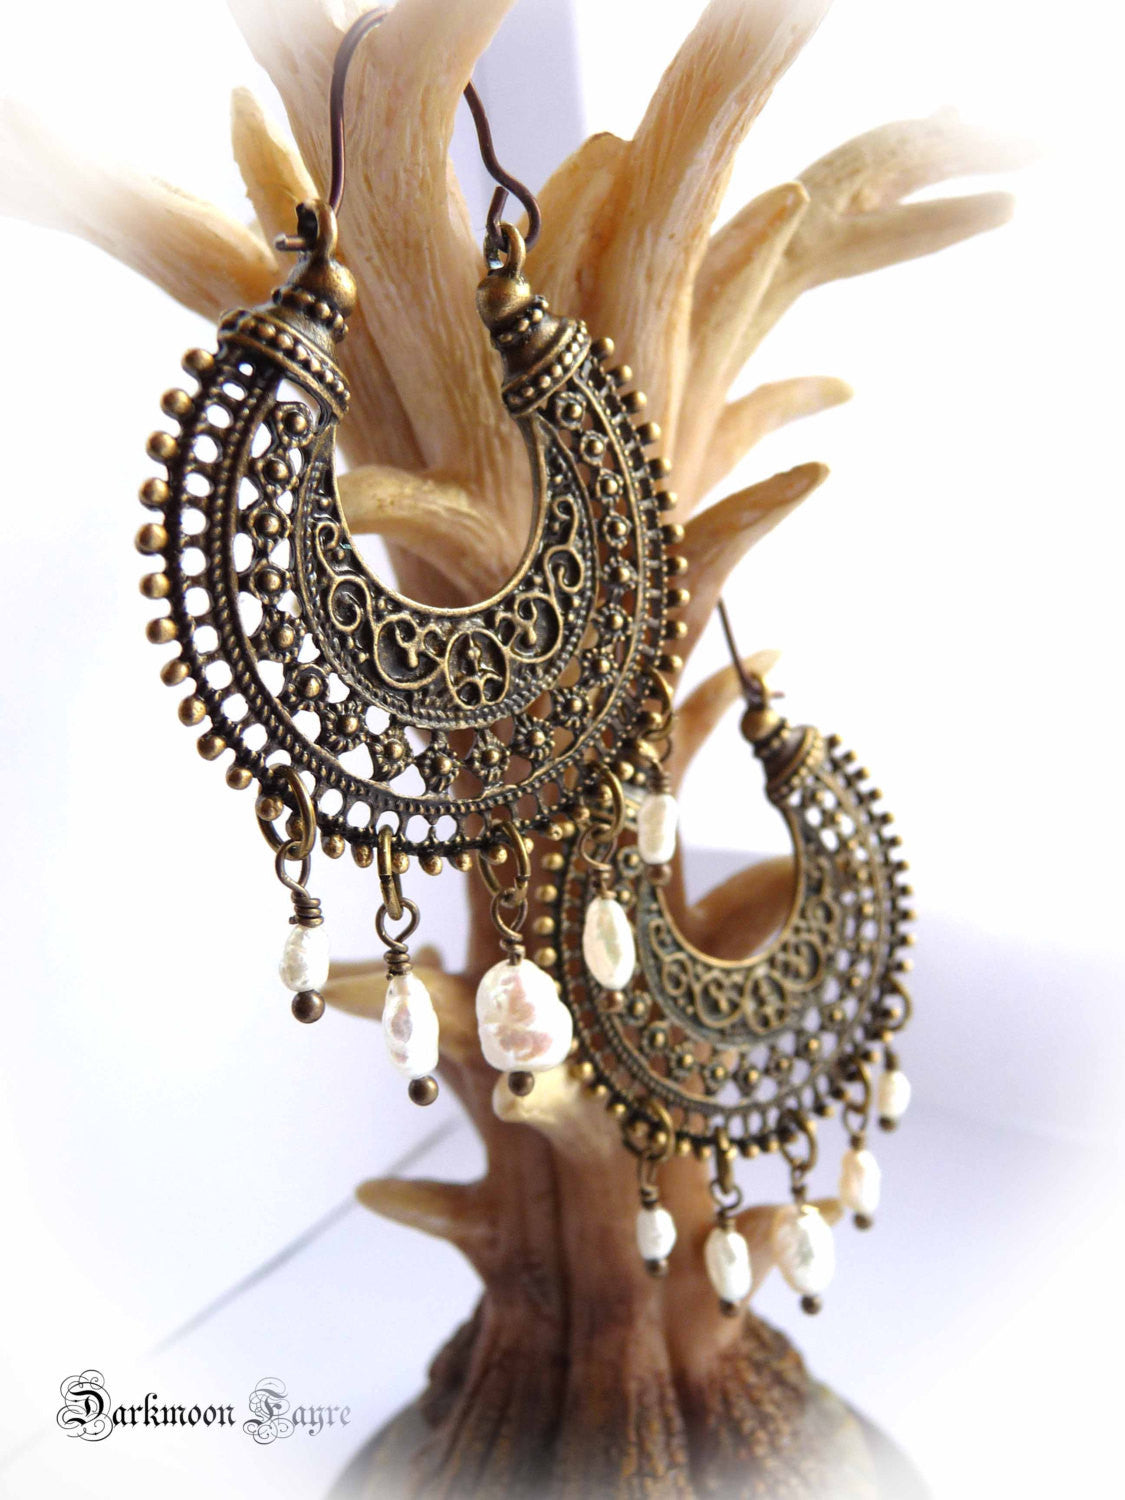 Antiqued Bronze Gypsy Hoops, Natural White/Ivory Freshwater Pearls. Hypo-allergenic Niobium Ear-wire - Darkmoon Fayre